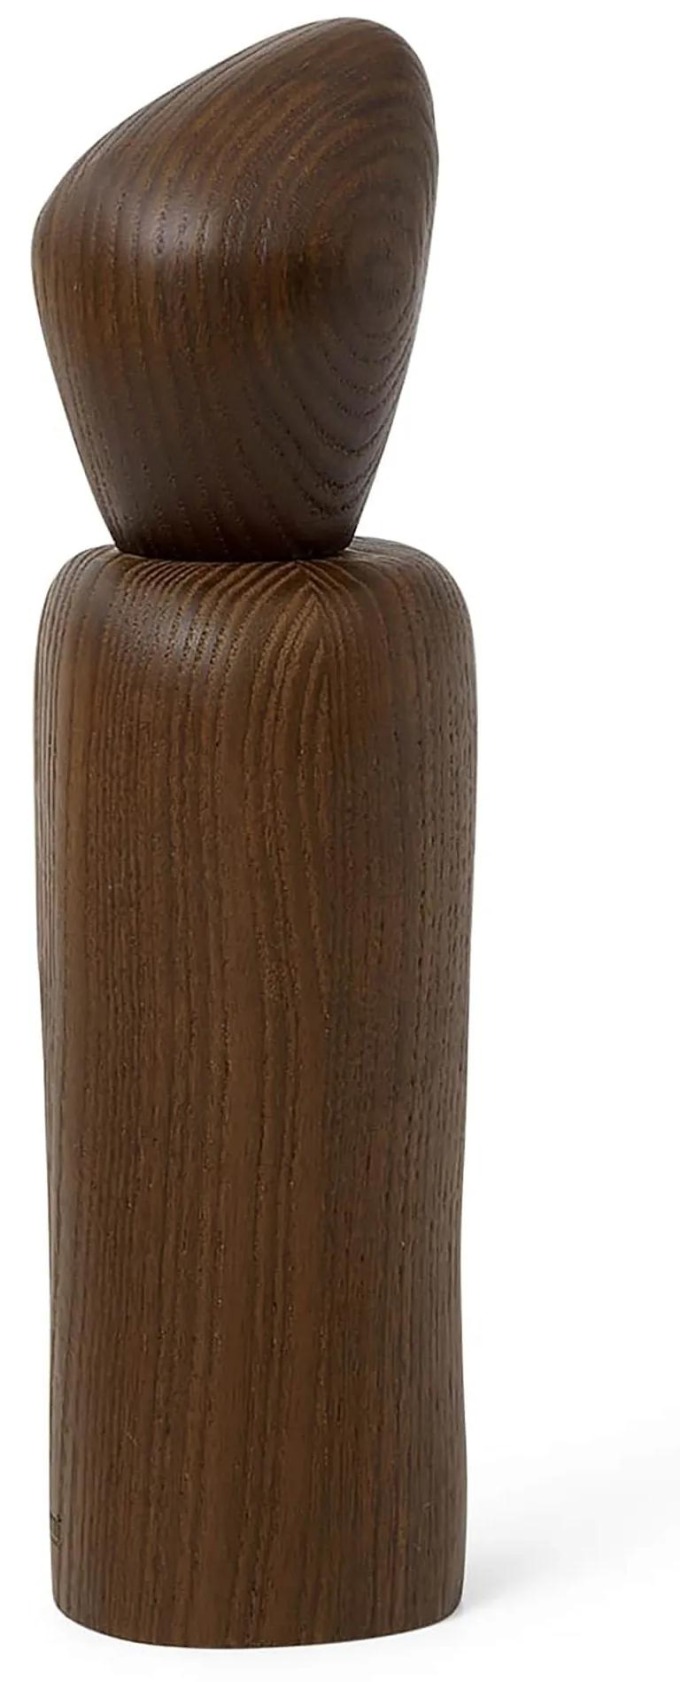 ferm LIVING Dřevěný mlýnek s keramickým strojkem Cairn Dark Brown, hnědá barva, dřevo, keramika